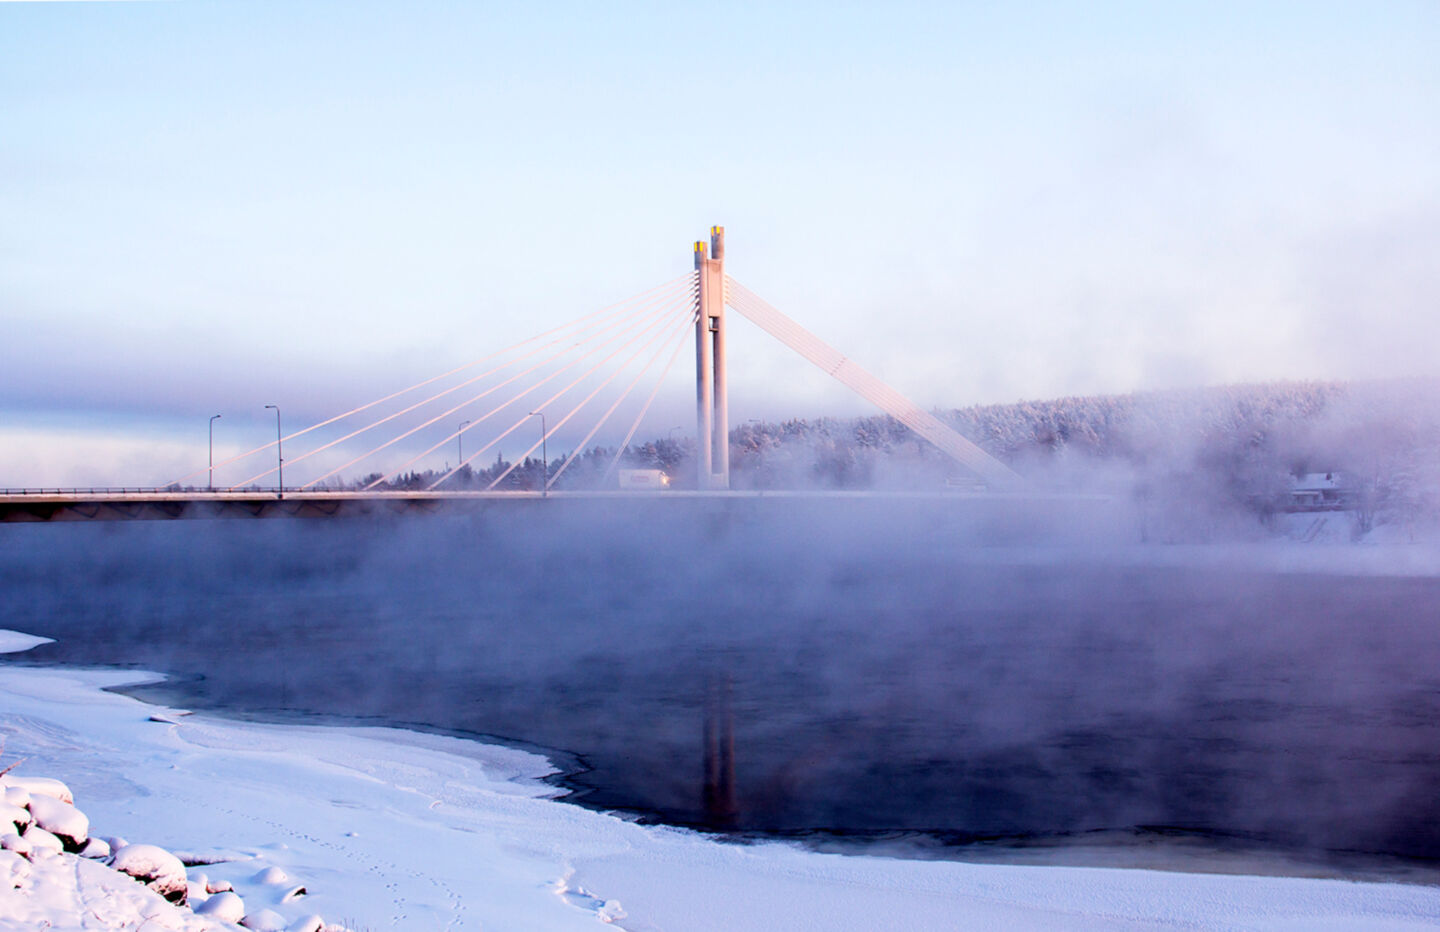 The Lumberjack Candle Bridge in winter in Rovaniemi, Finland